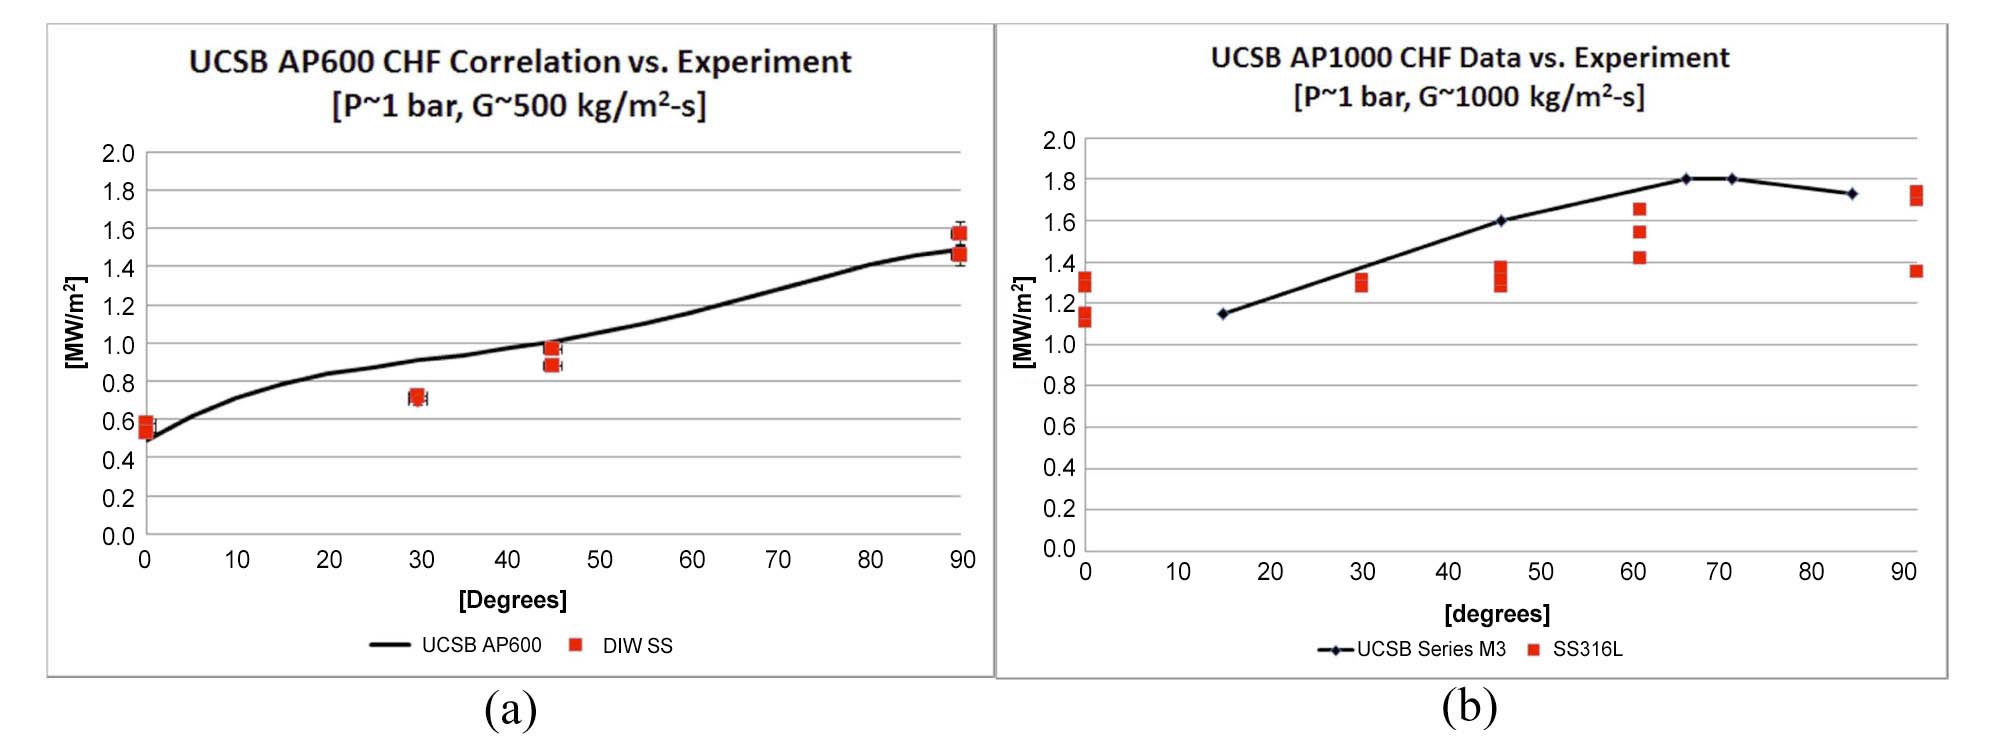 UCSB & MIT CHF Data for Water at (a) G=500 kg/m2-s and (b) G=1000 kg/m2-s